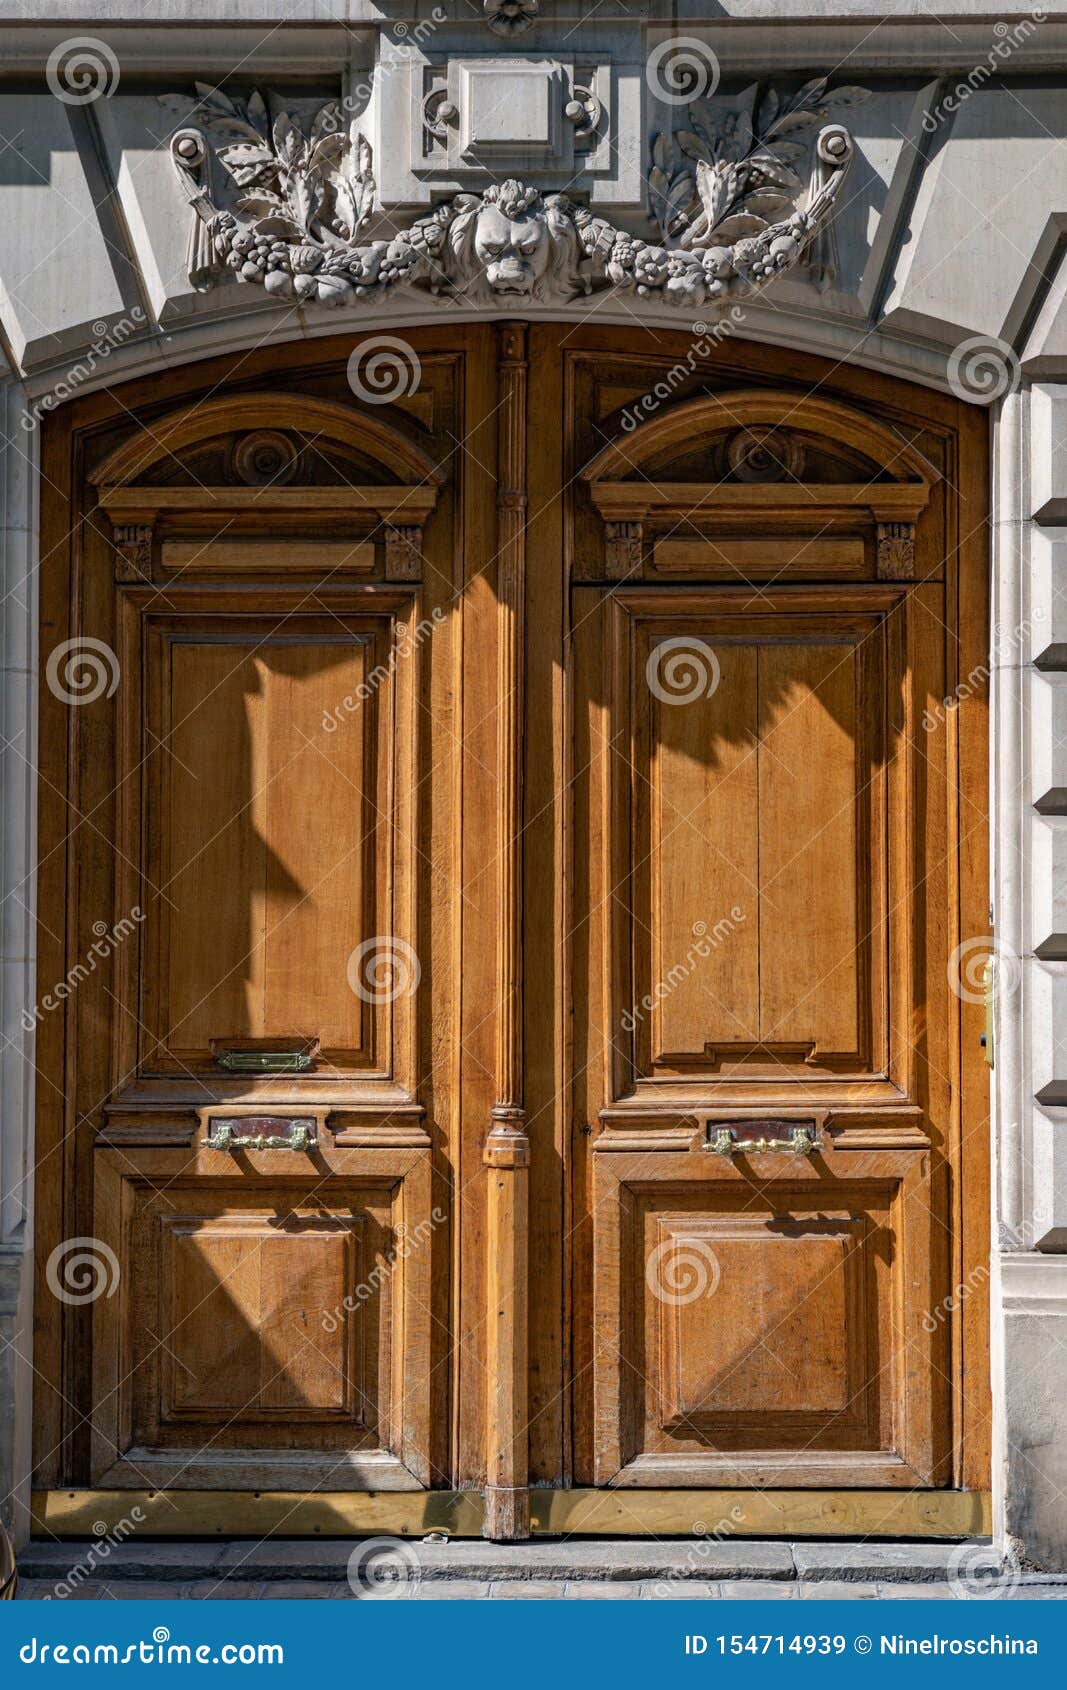 Antique Double Door Entrance Of Old Building In Paris France